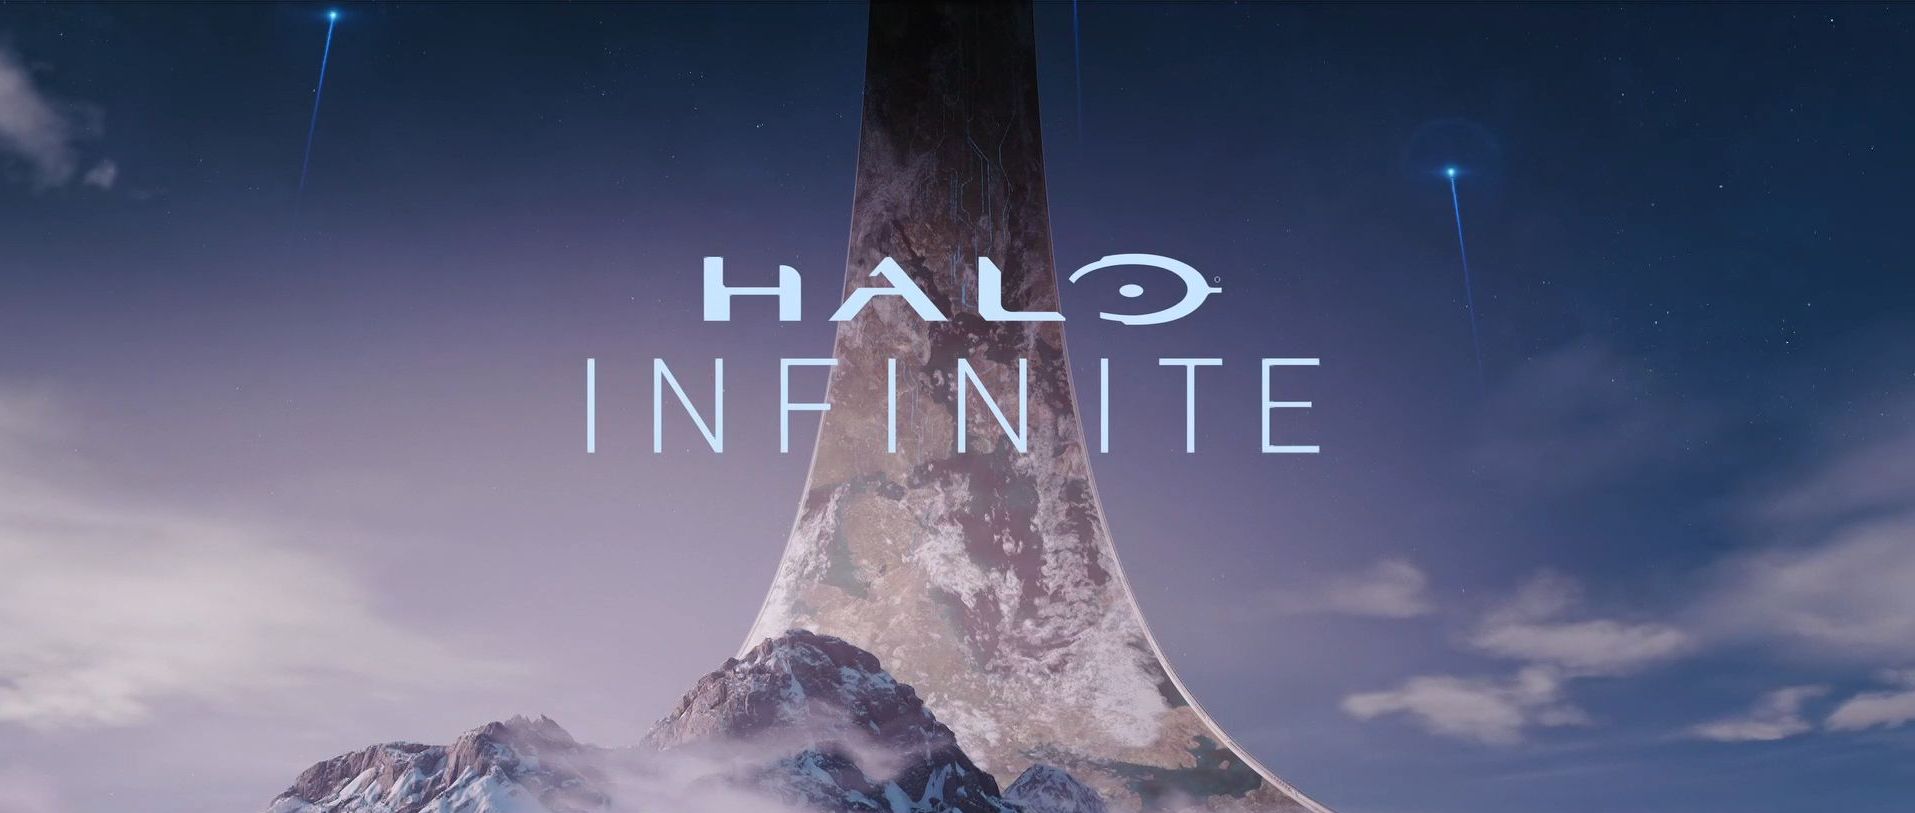 Halo Infinite, Halo, Microsoft, 343 Industries